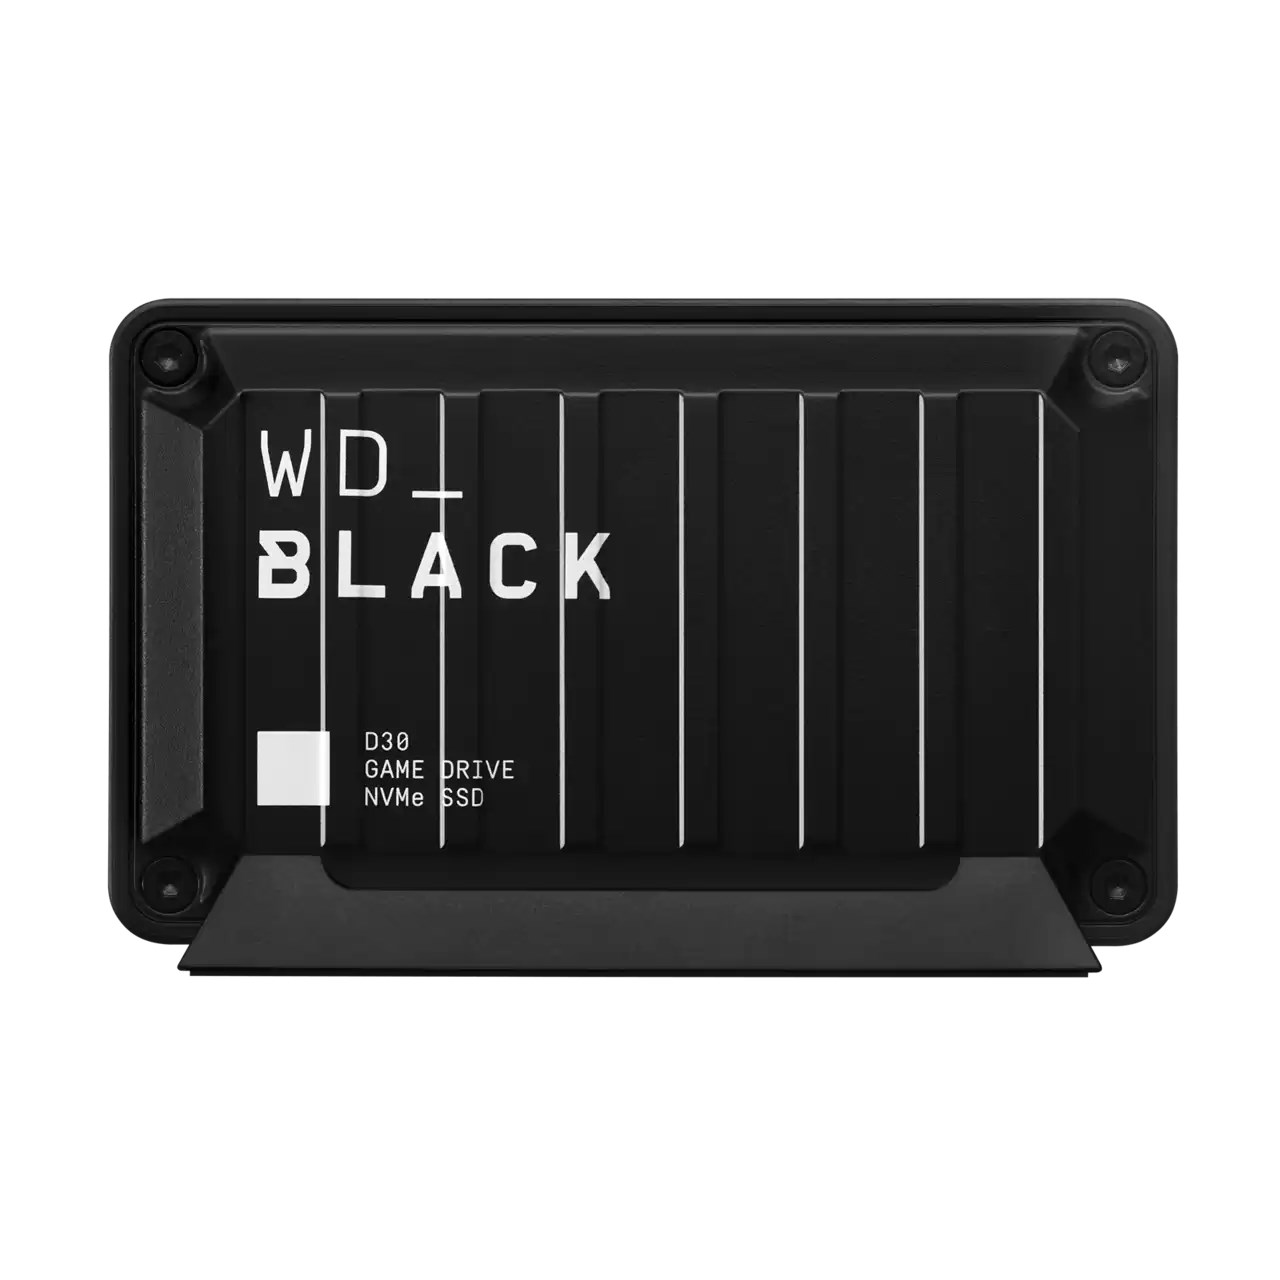 SanDisk externí SSD 500GB WD BLACK D30 Game Drive0 